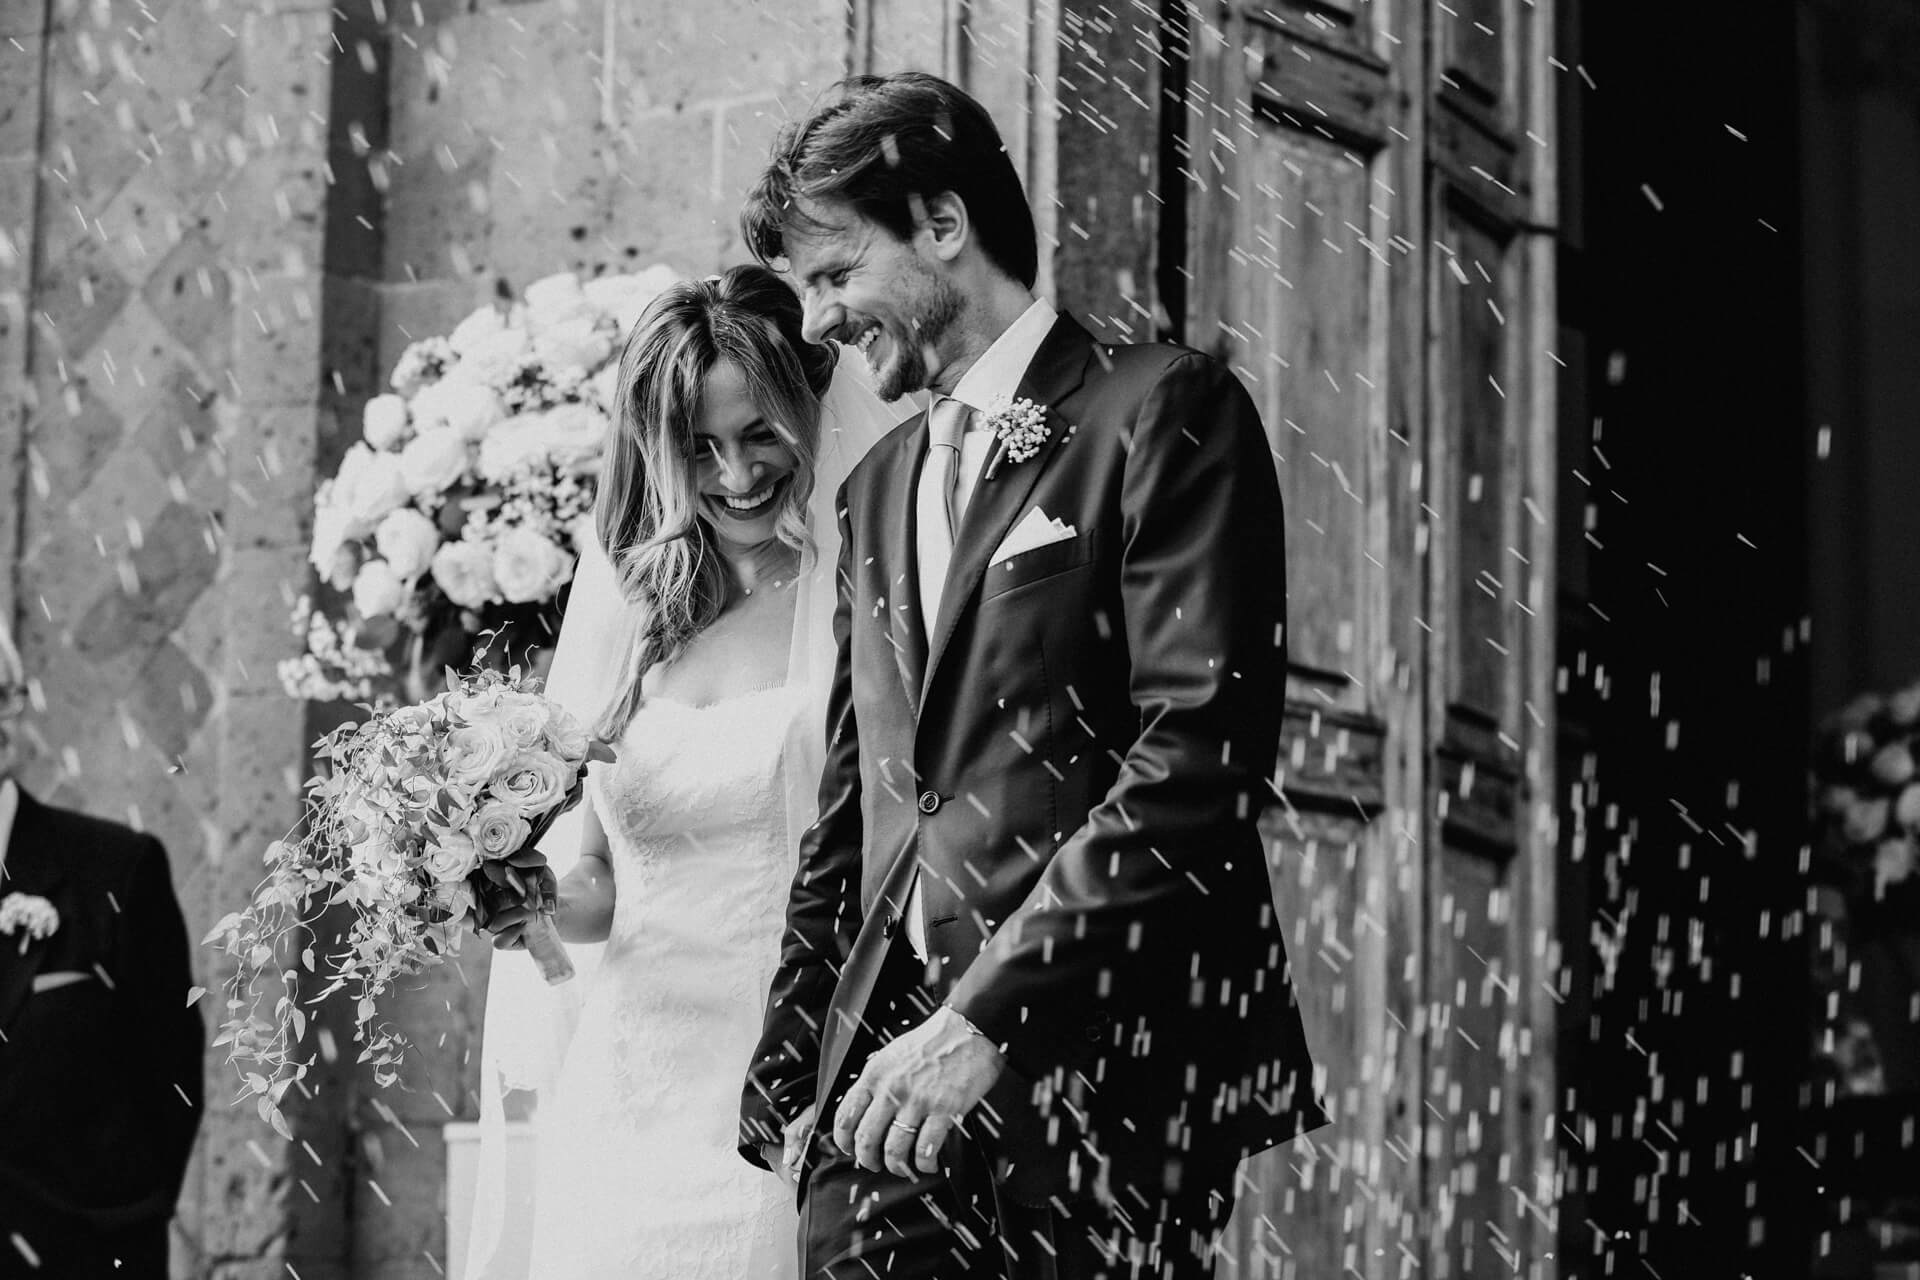 Life Photography - Italian wedding photographers